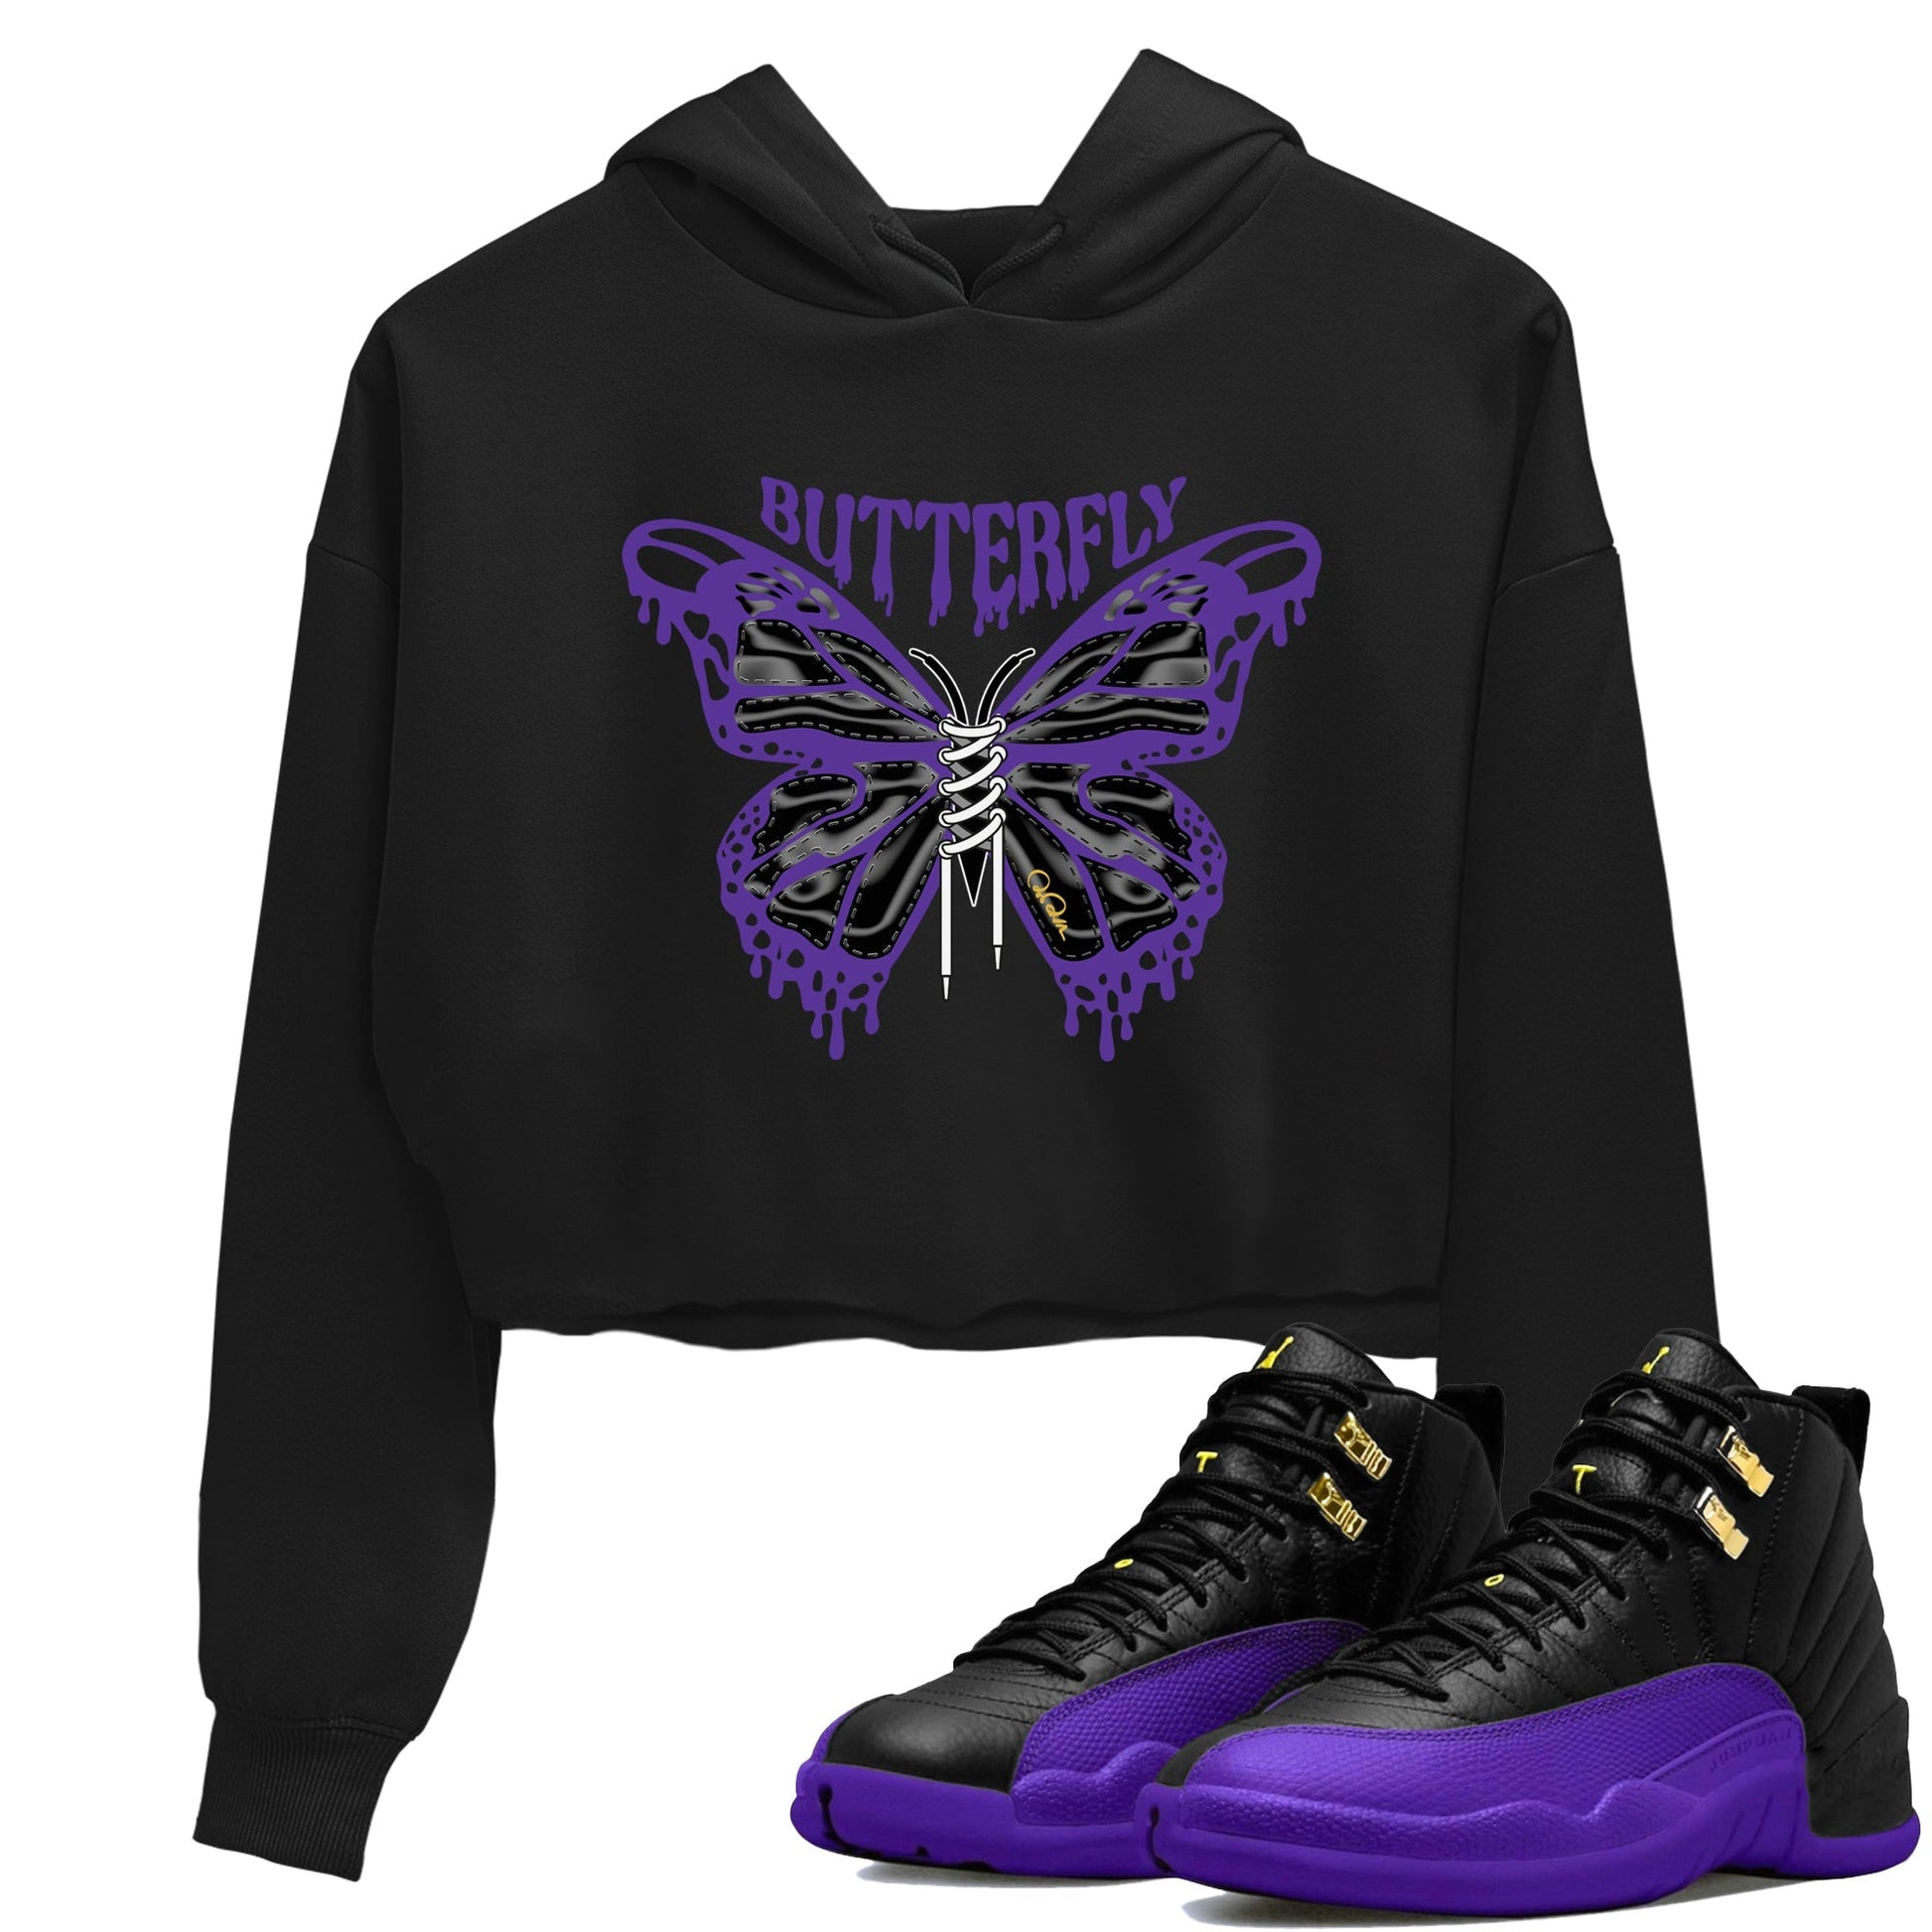 Air Jordan 12 Field Purple Sneaker Match Tees Butterfly Sneaker Tees AJ12 Field Purple Sneaker Release Tees Women's Shirts Black 1